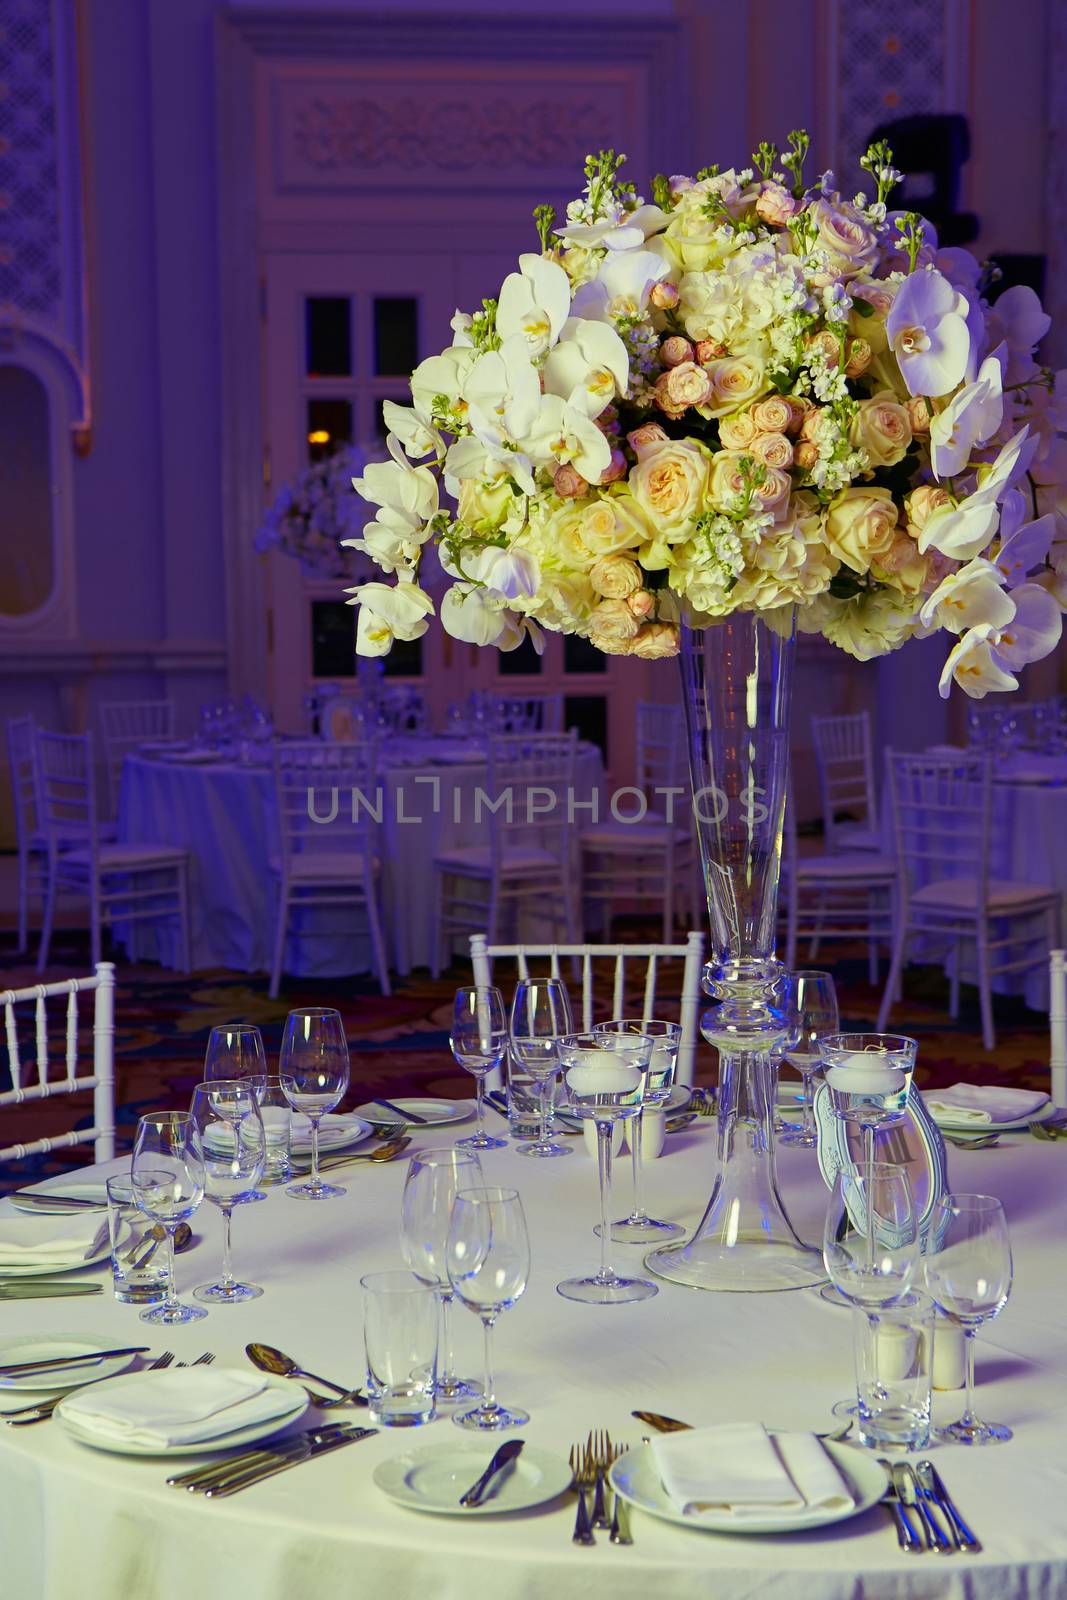 flowers on table in wedding day by sarymsakov